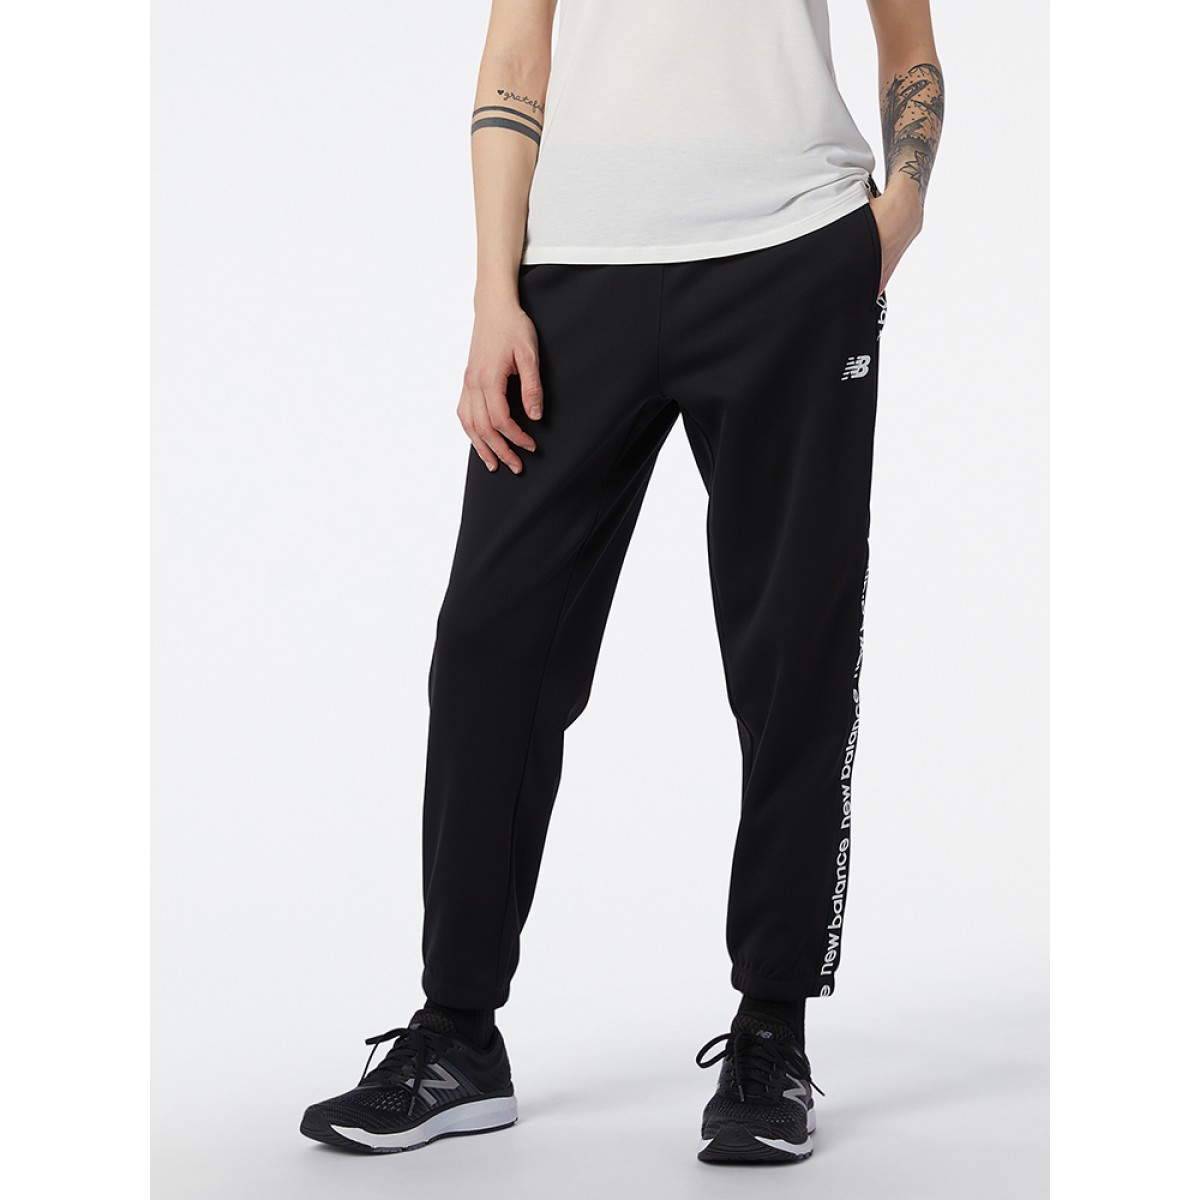 New Balance joggers Teamwear Training black color | buy on PRM